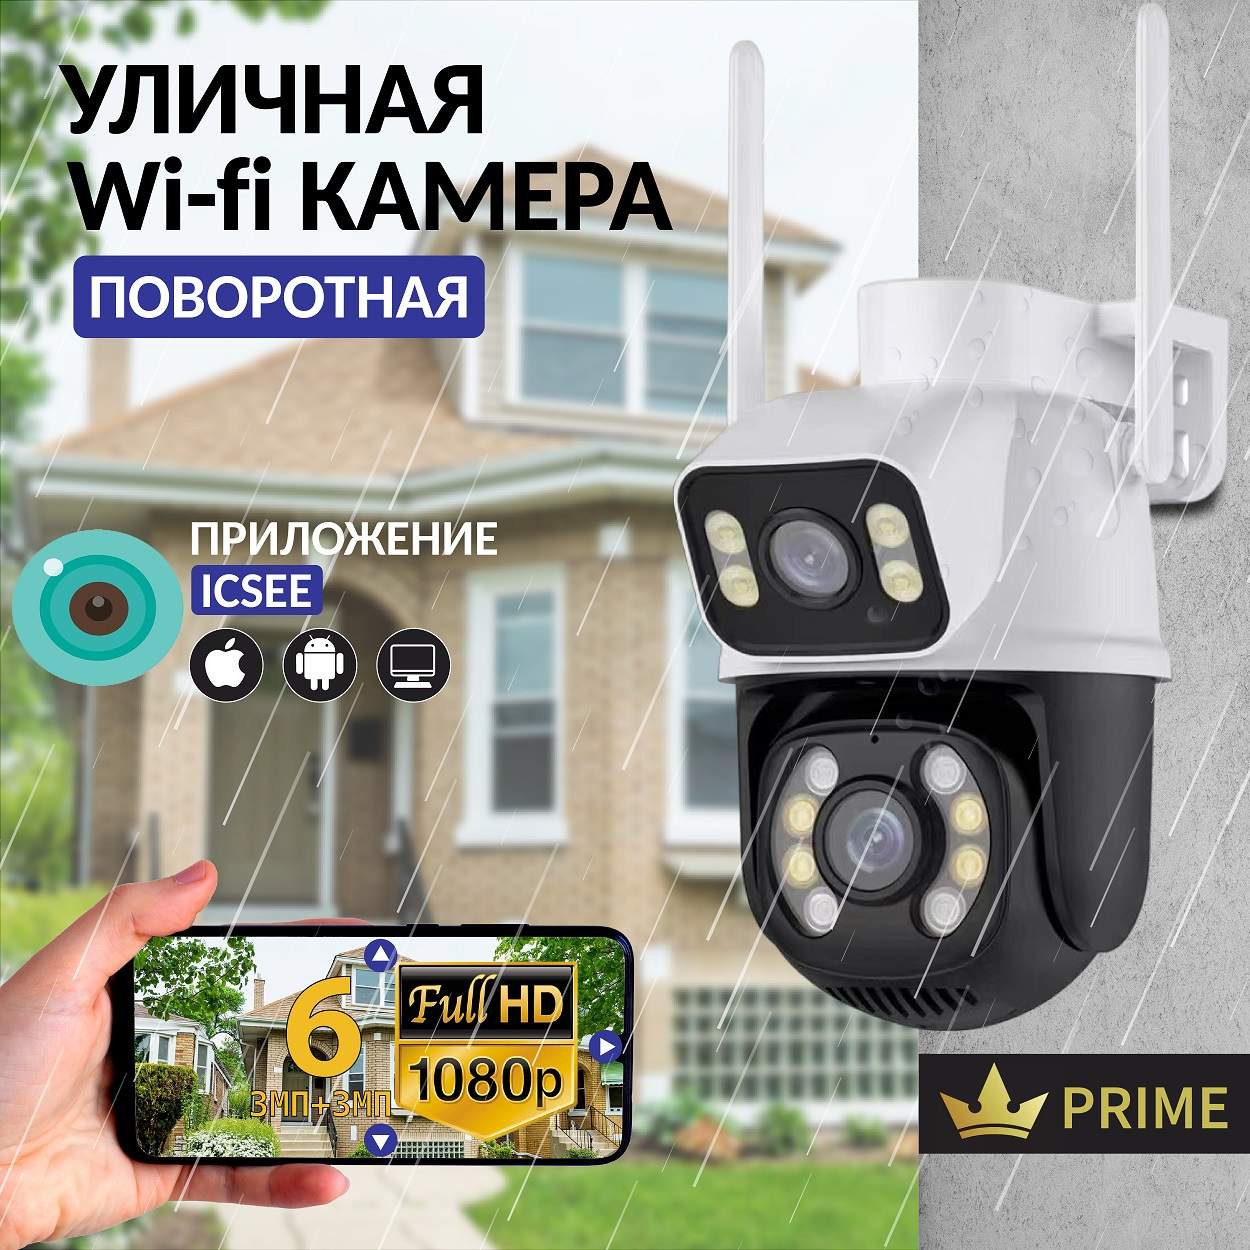 беспроводная камера видеонаблюдения zodikam 3155w уличная wi fi 5мп Камера видеонаблюдения Wifi уличная поворотная wifi 6 мп (3Мп + 3Мп)